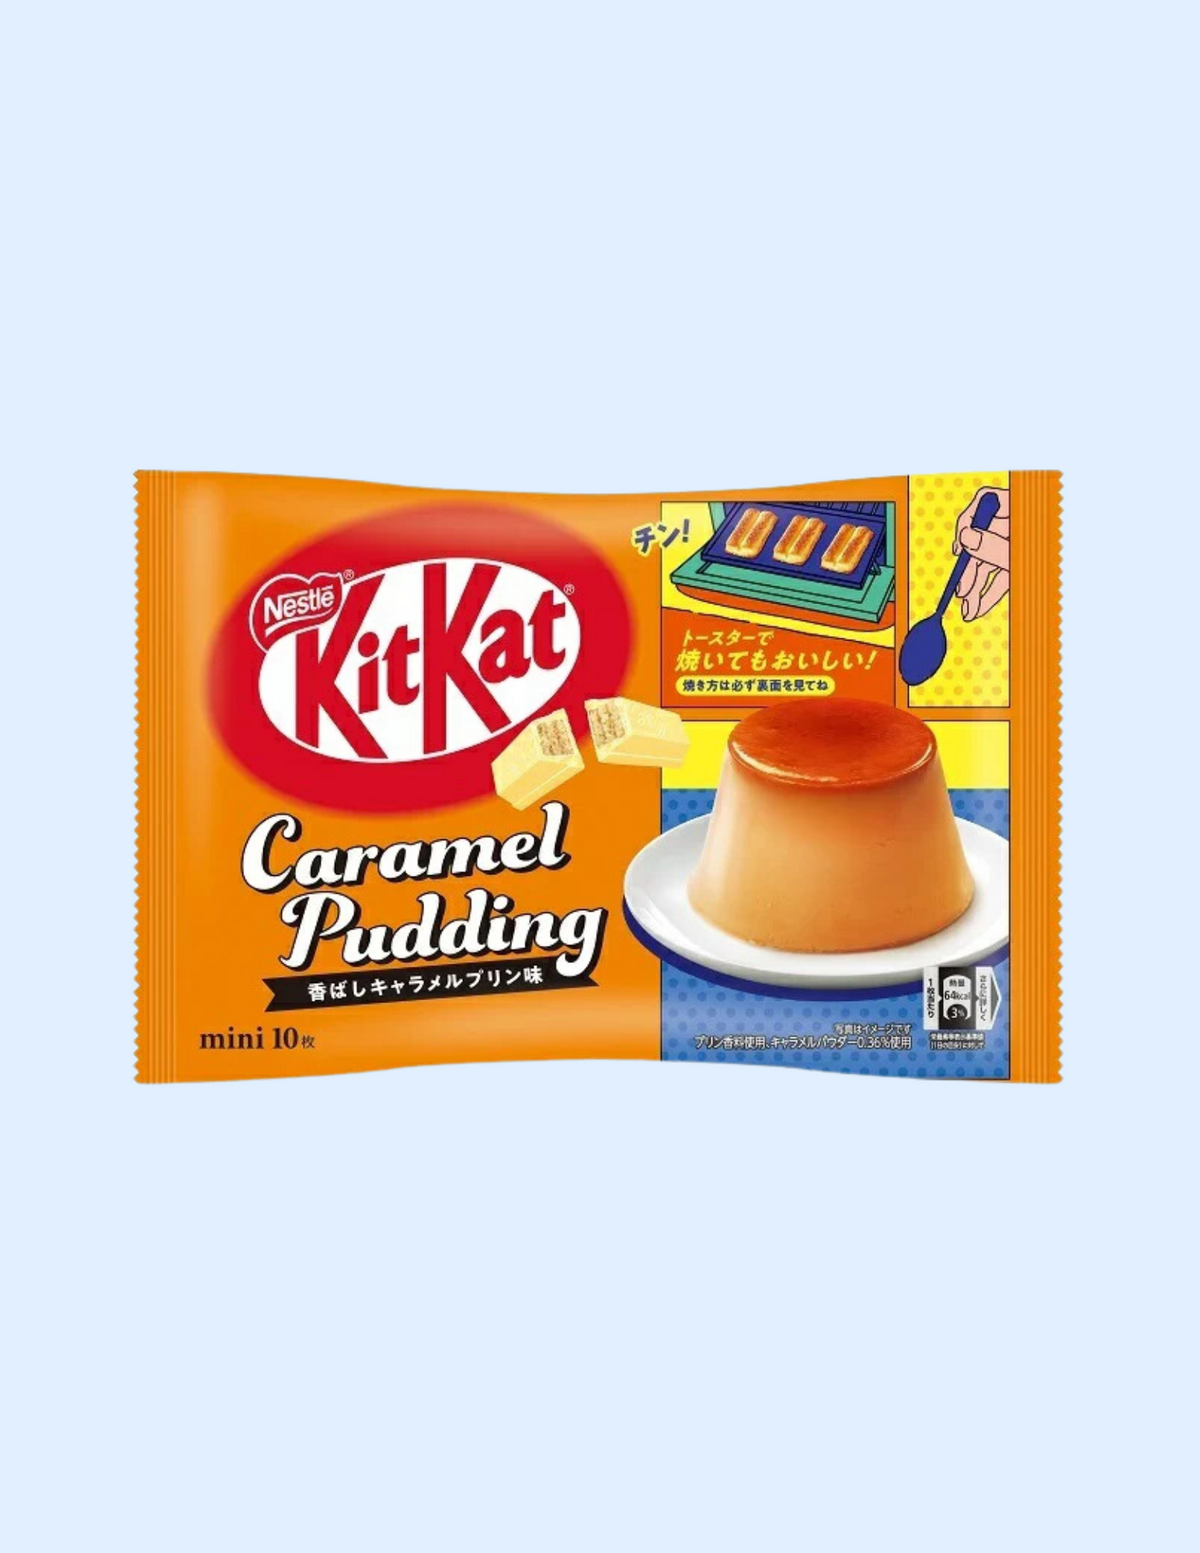 KitKat Caramel Pudding